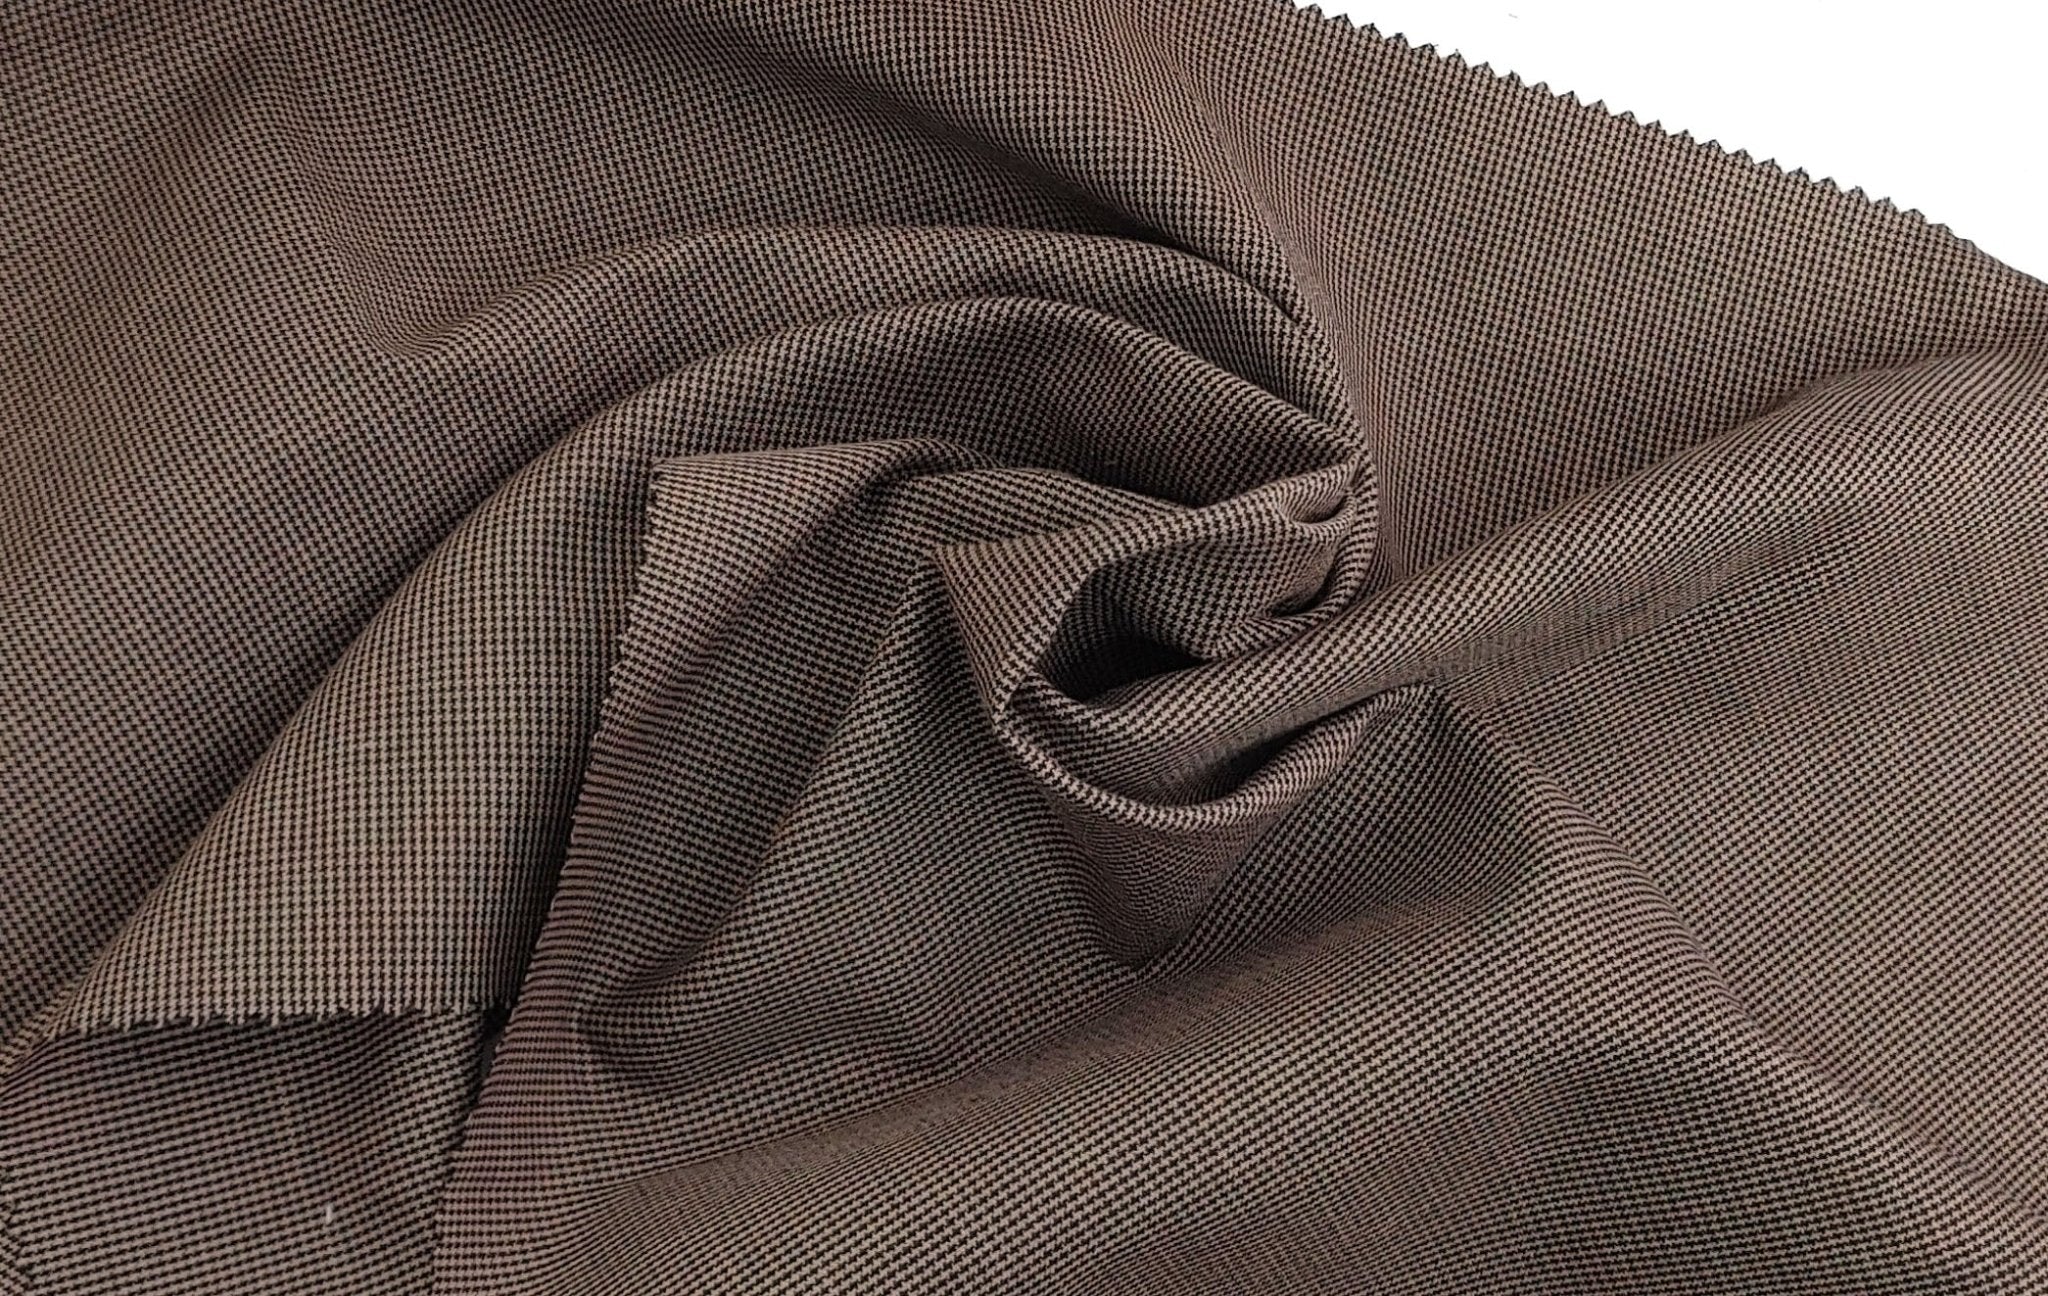 Mini Starcheck Gingham Bliss: Linen Cotton Ramie Fabric 3028 3241 - The Linen Lab - Brown